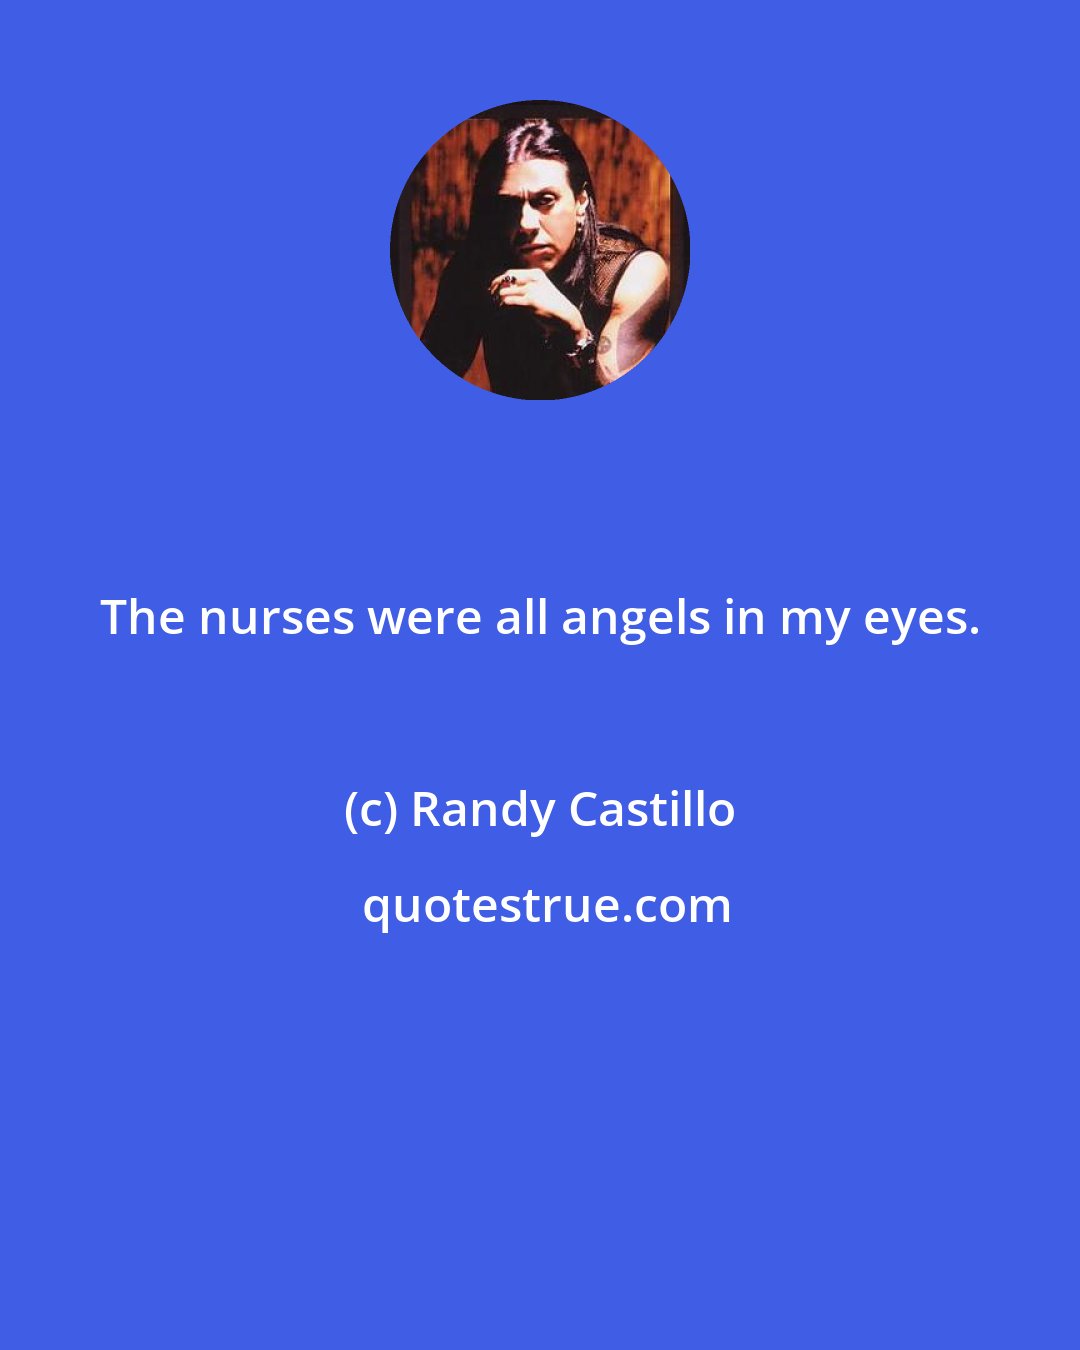 Randy Castillo: The nurses were all angels in my eyes.